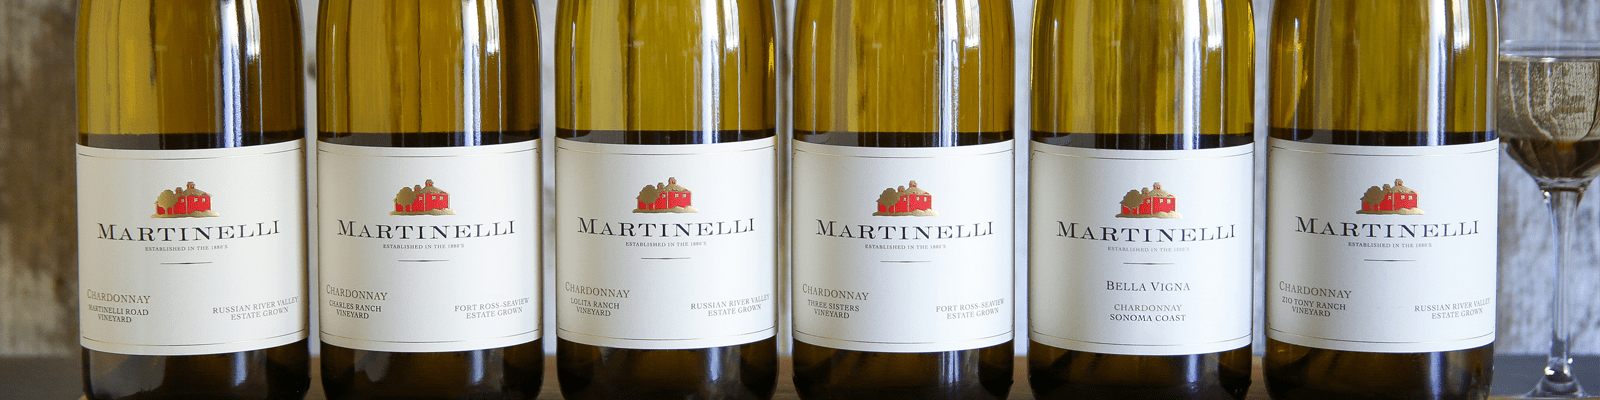 6 Martinelli chardonnay bottles